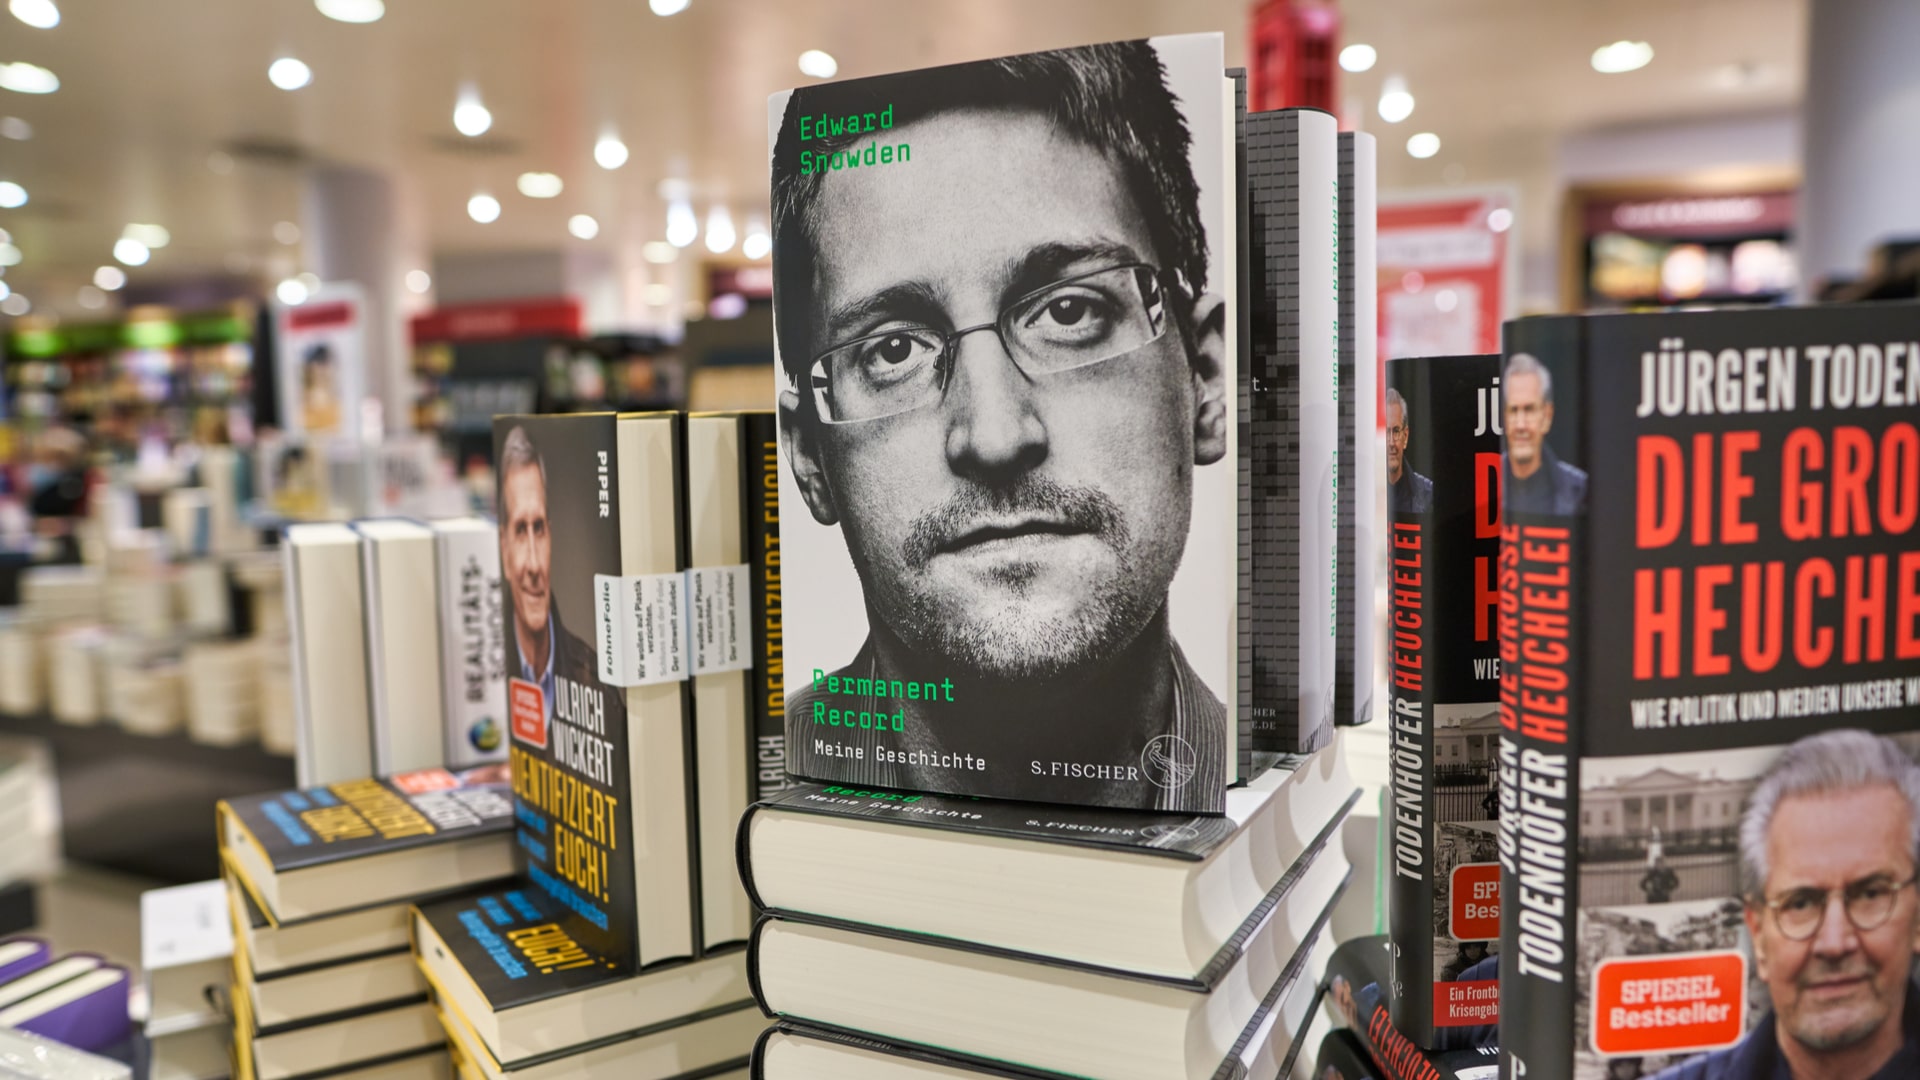 “Moeda digital de Banco Central é fascista”, diz Snowden